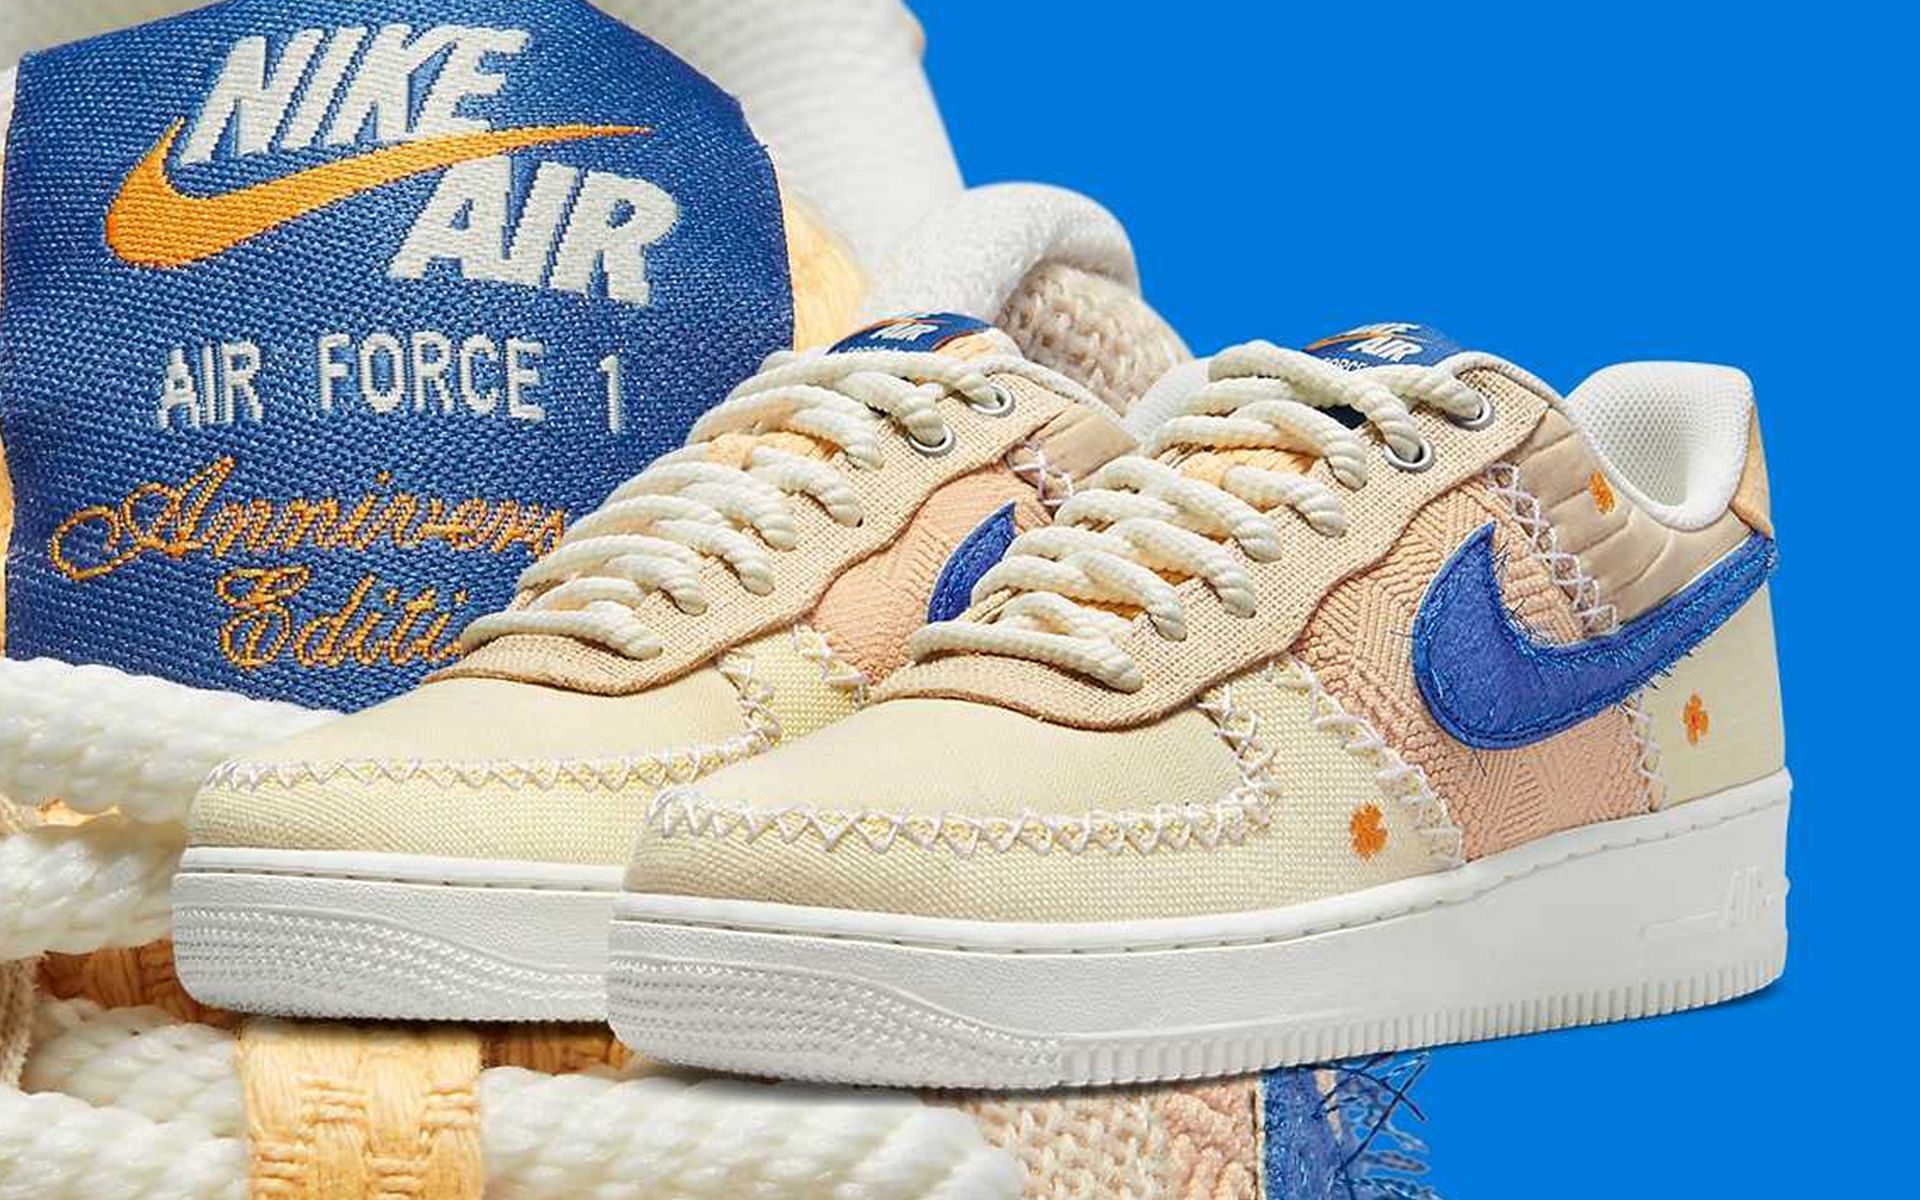 Nike Air Force 1 LA Flea Anniversary Edition shoes (Image via Twitter/@Sneaker_Stupid1)